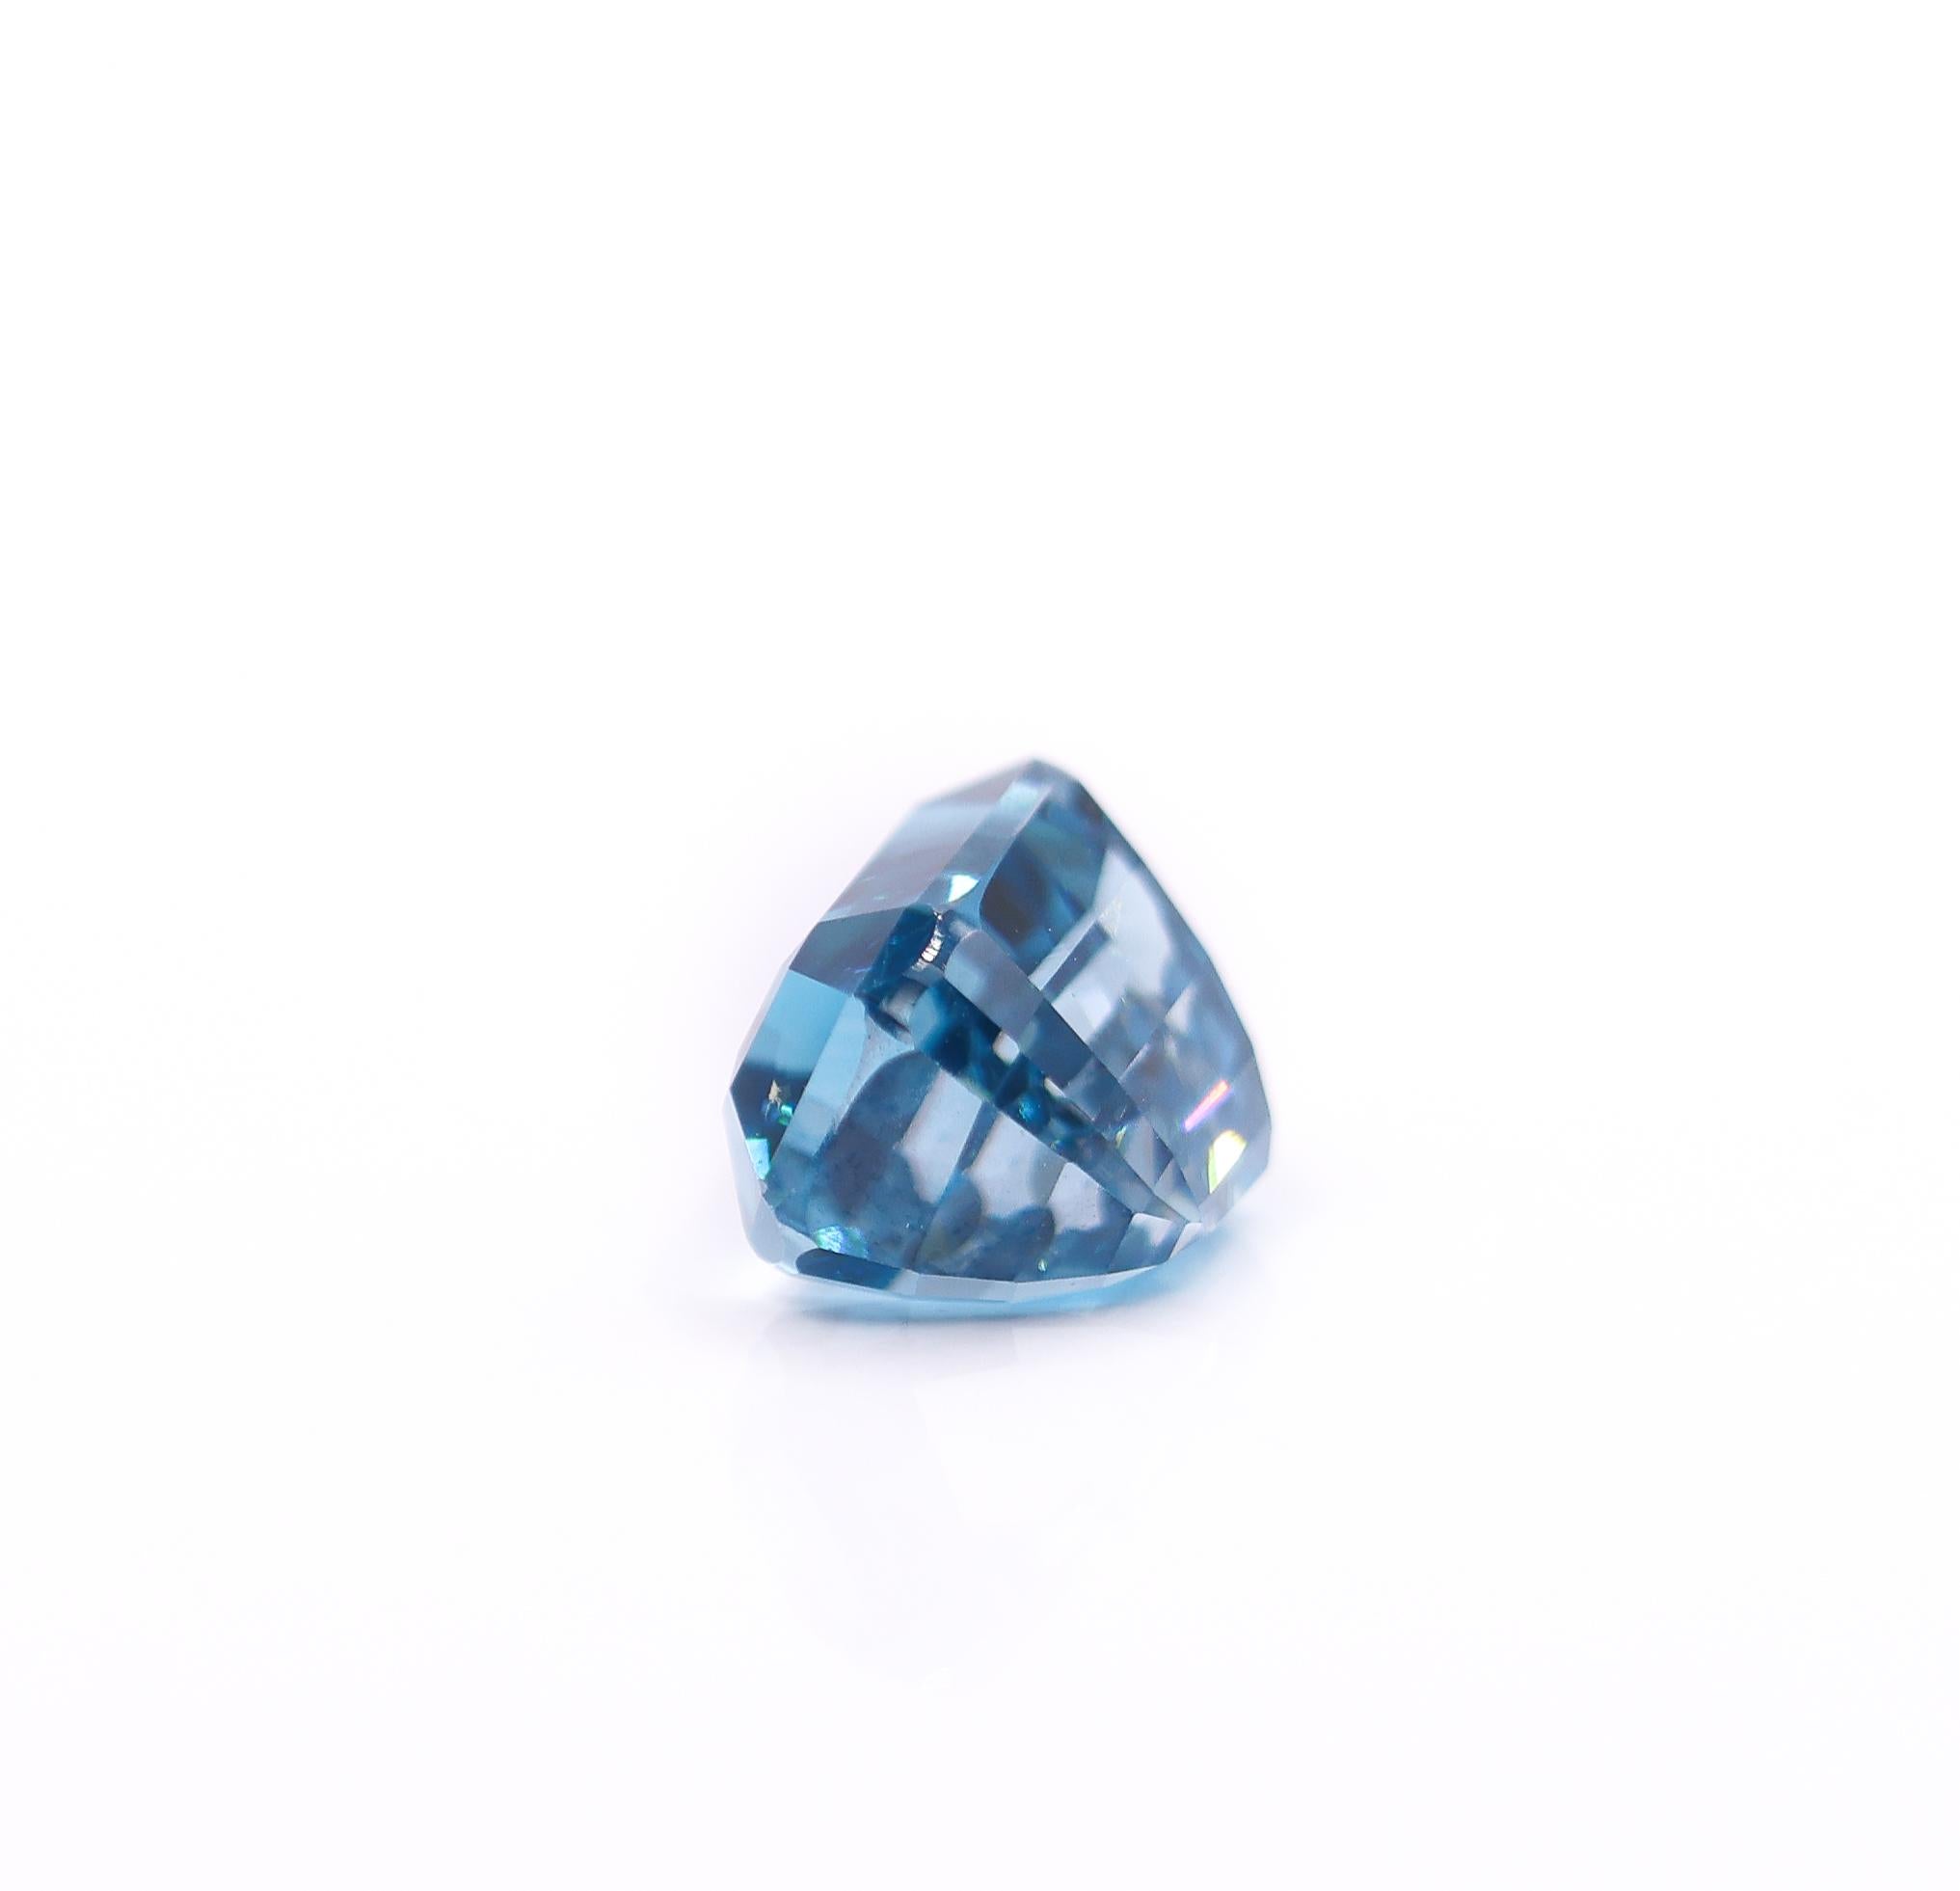 Elongated 4.62 Carat Blue Zircon Gemstone | EM 9x6mm